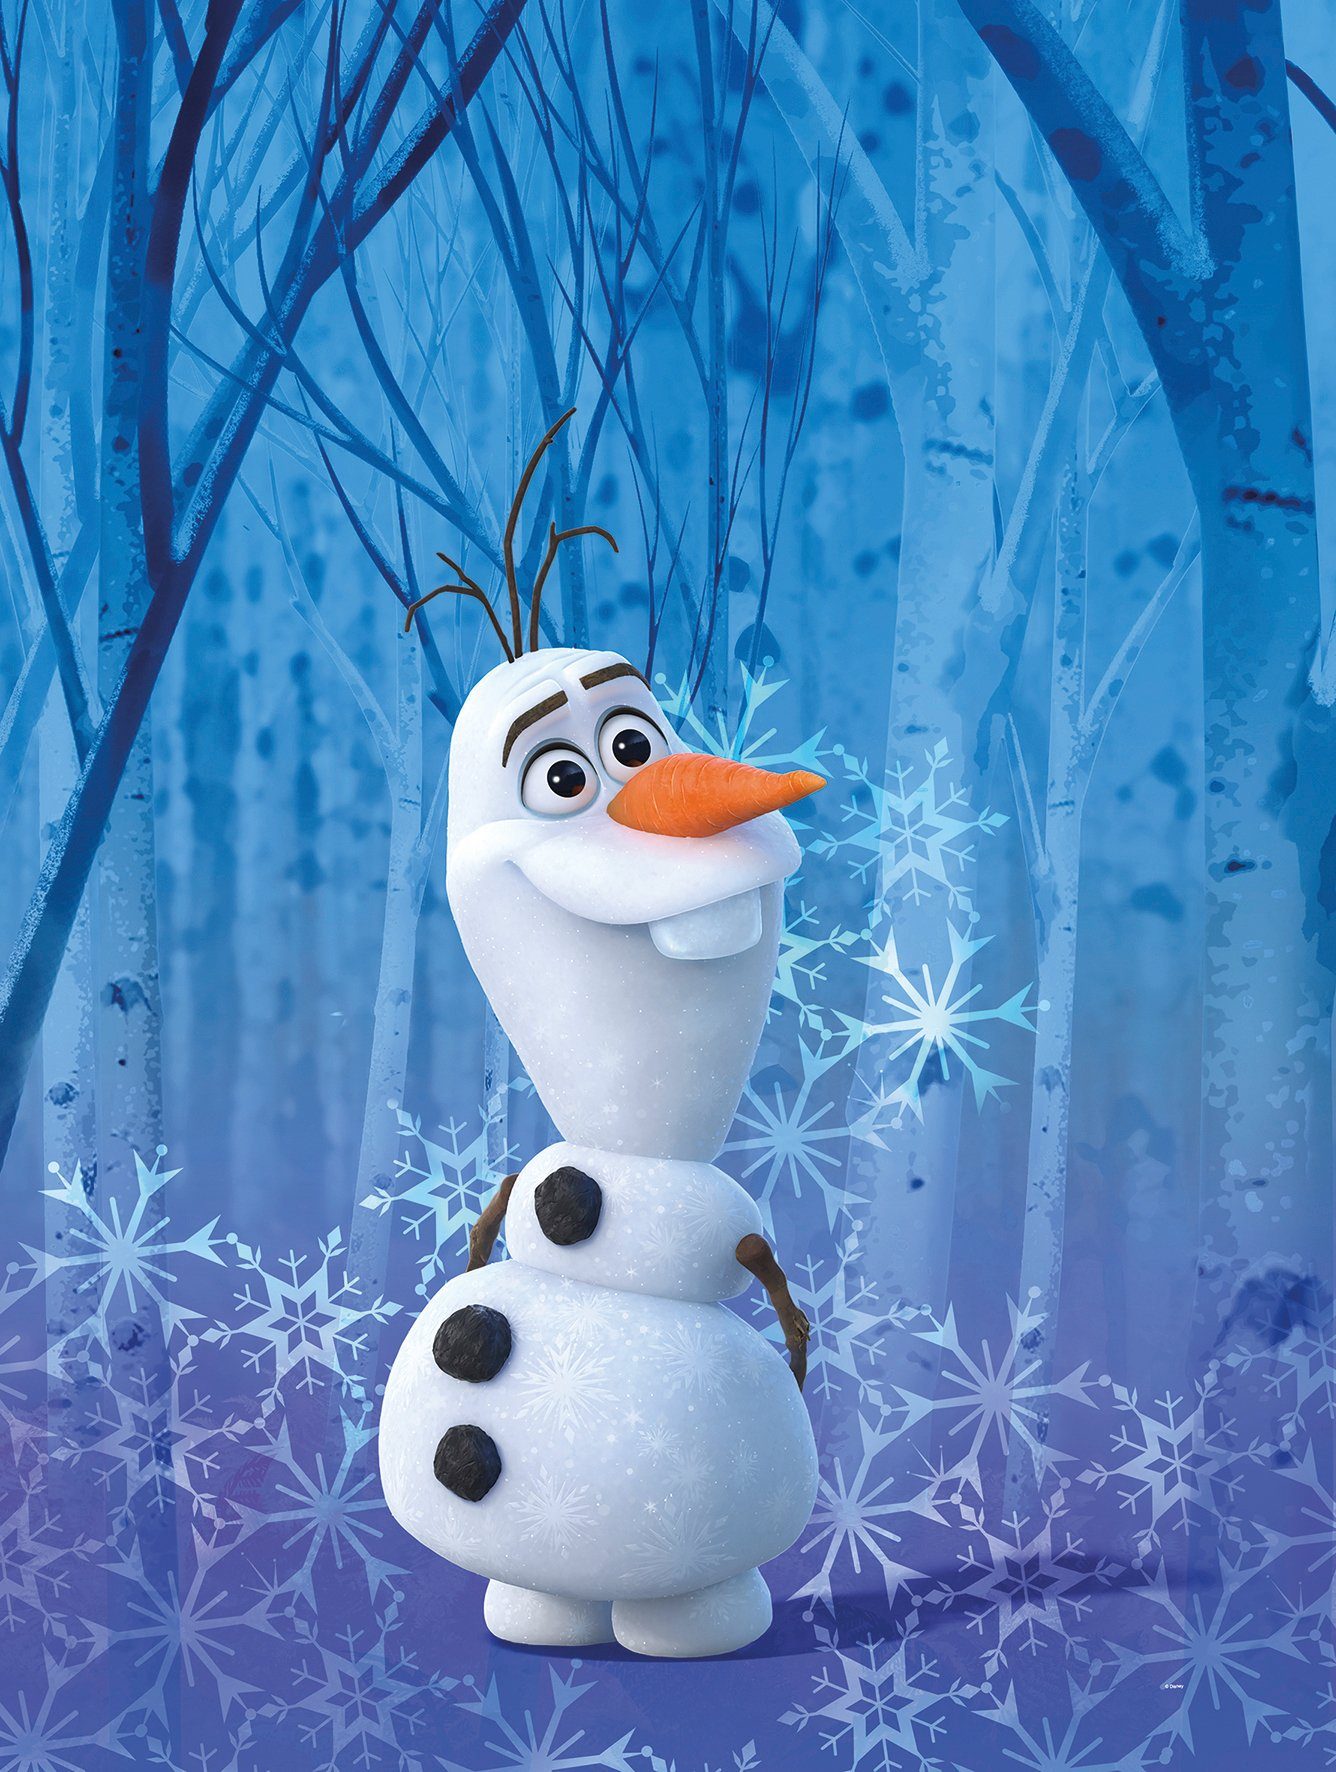 Komar Poster Frozen Olaf crystal